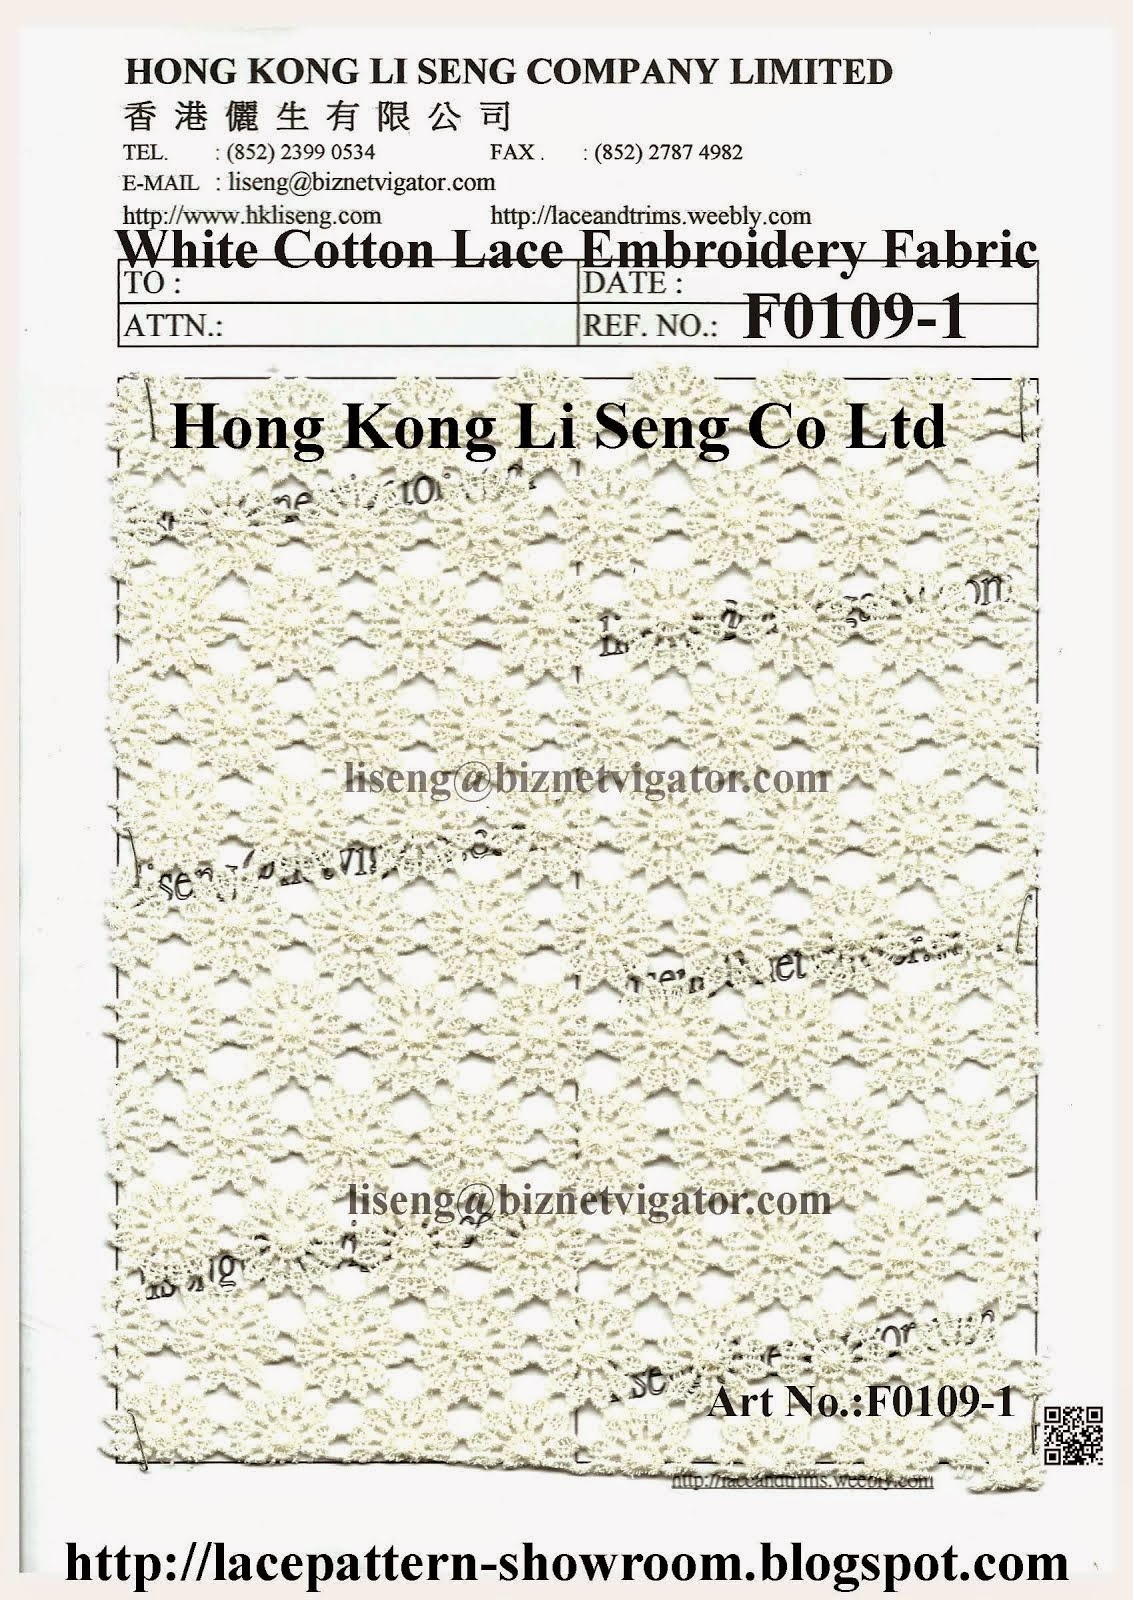 New White Cotton Lace Embroidery Fabric - Manufactory " Hong Kong Li Seng Co Ltd "